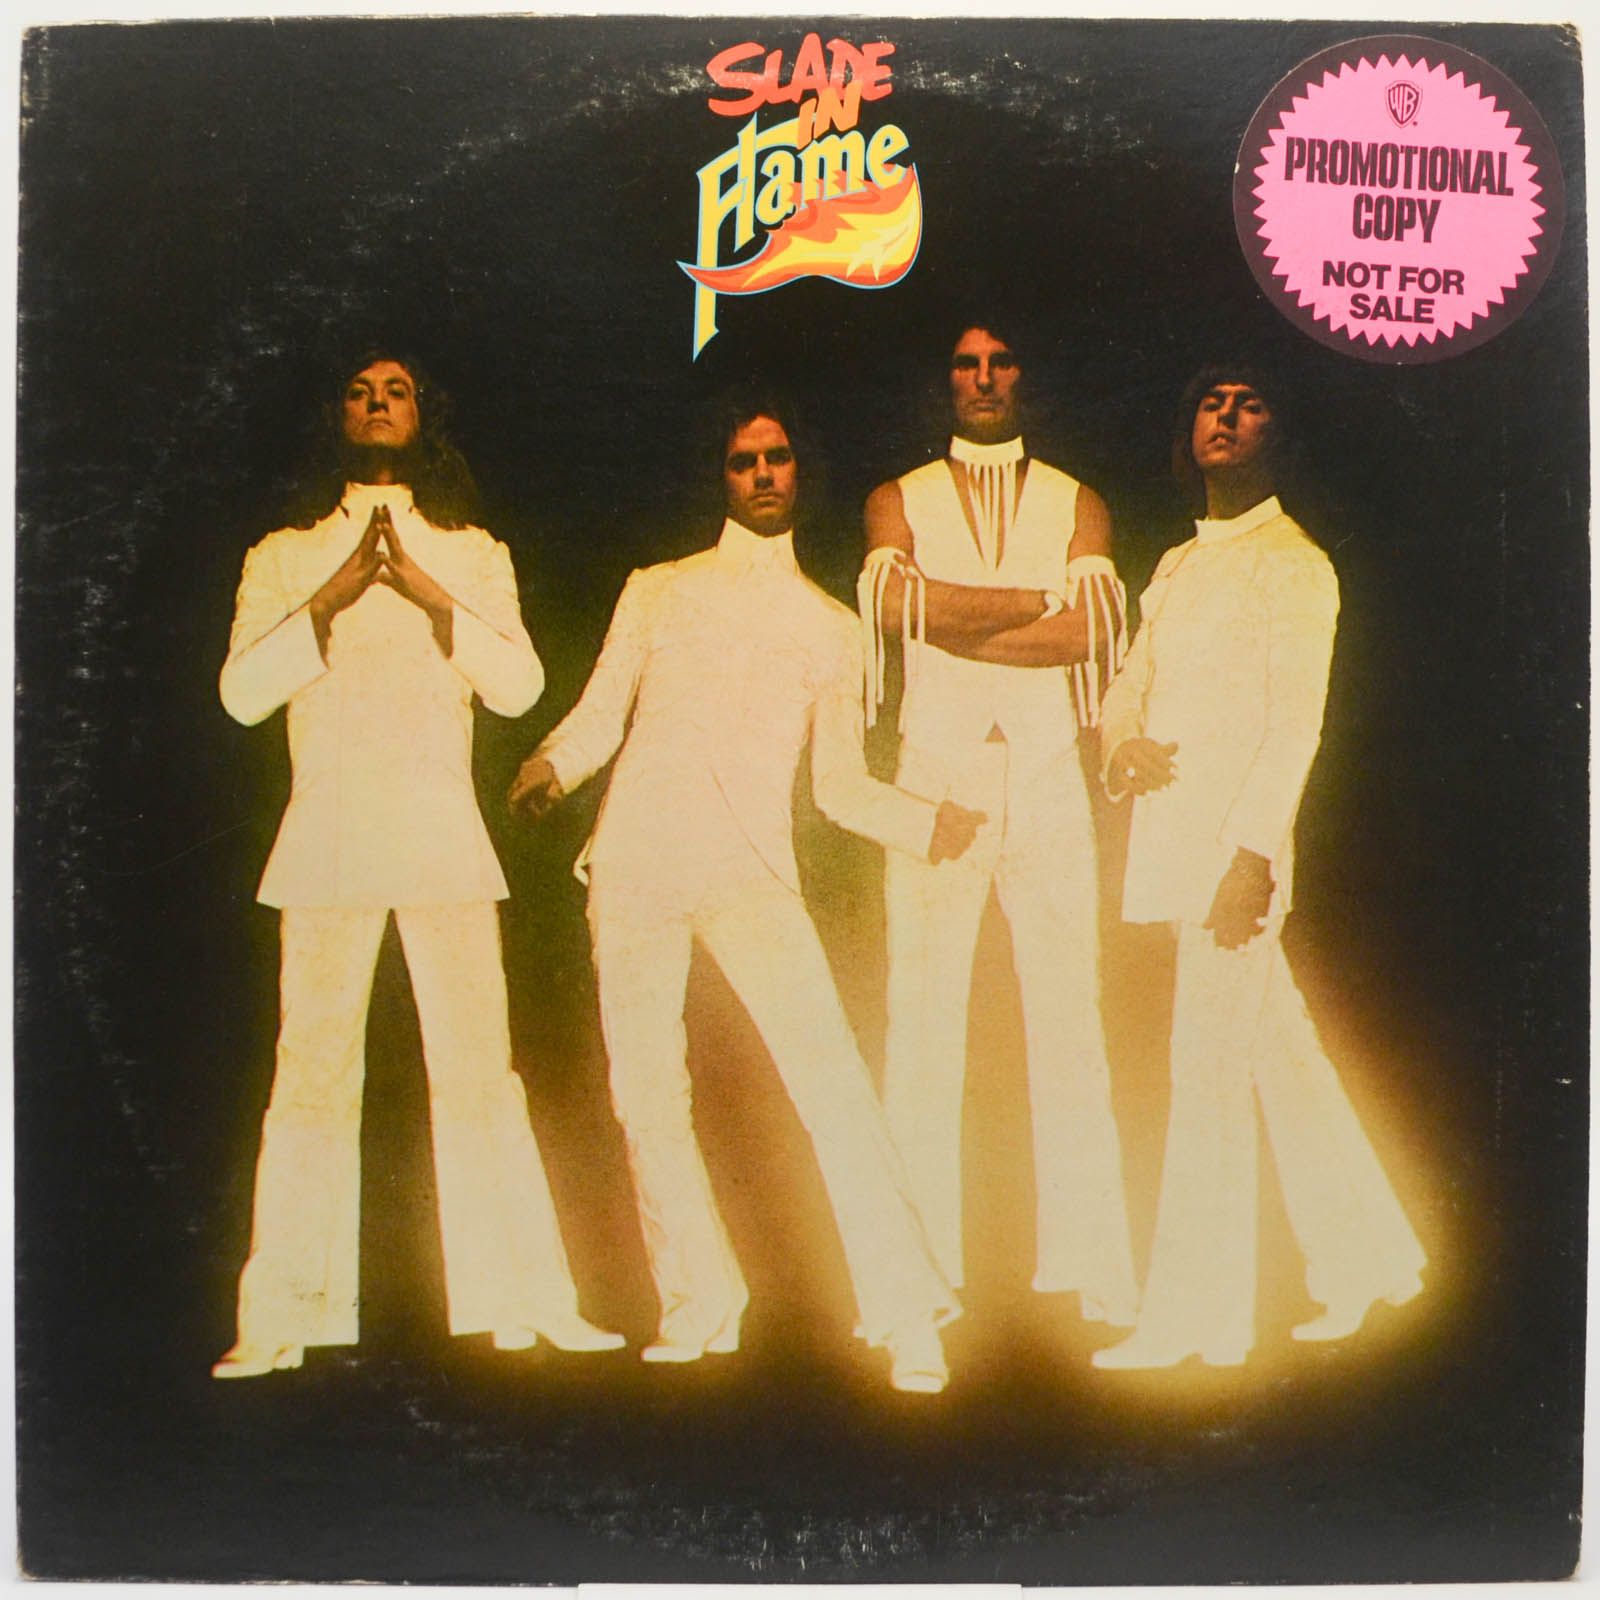 Slade — Slade In Flame (USA), 1975